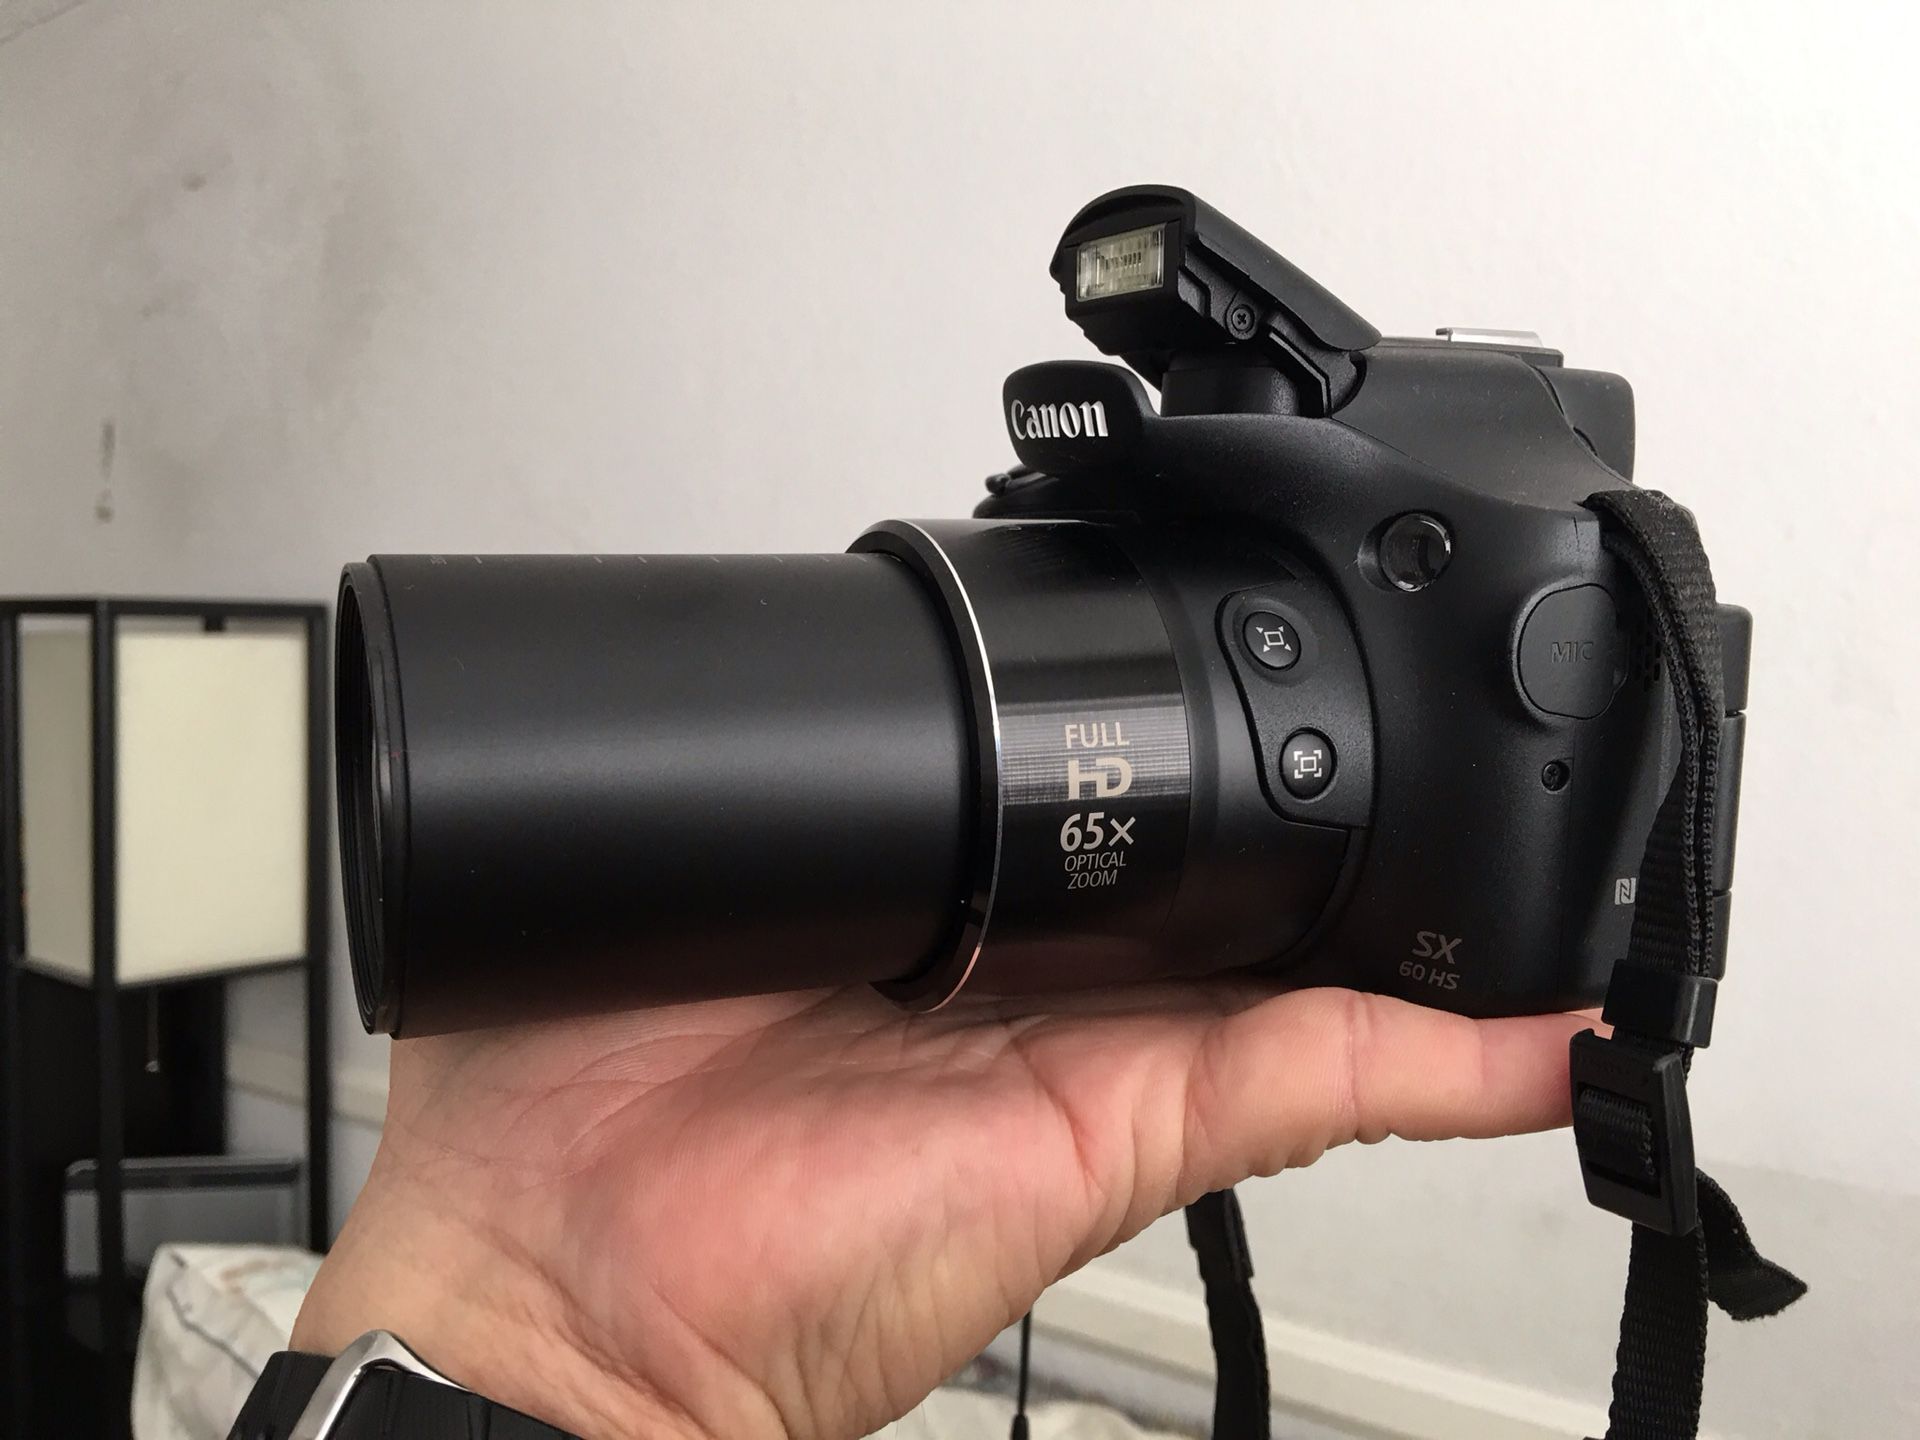 Canon Powershot SX60 HS Full HD Digital mega zoom WiFi Camera Like New $285 Only!